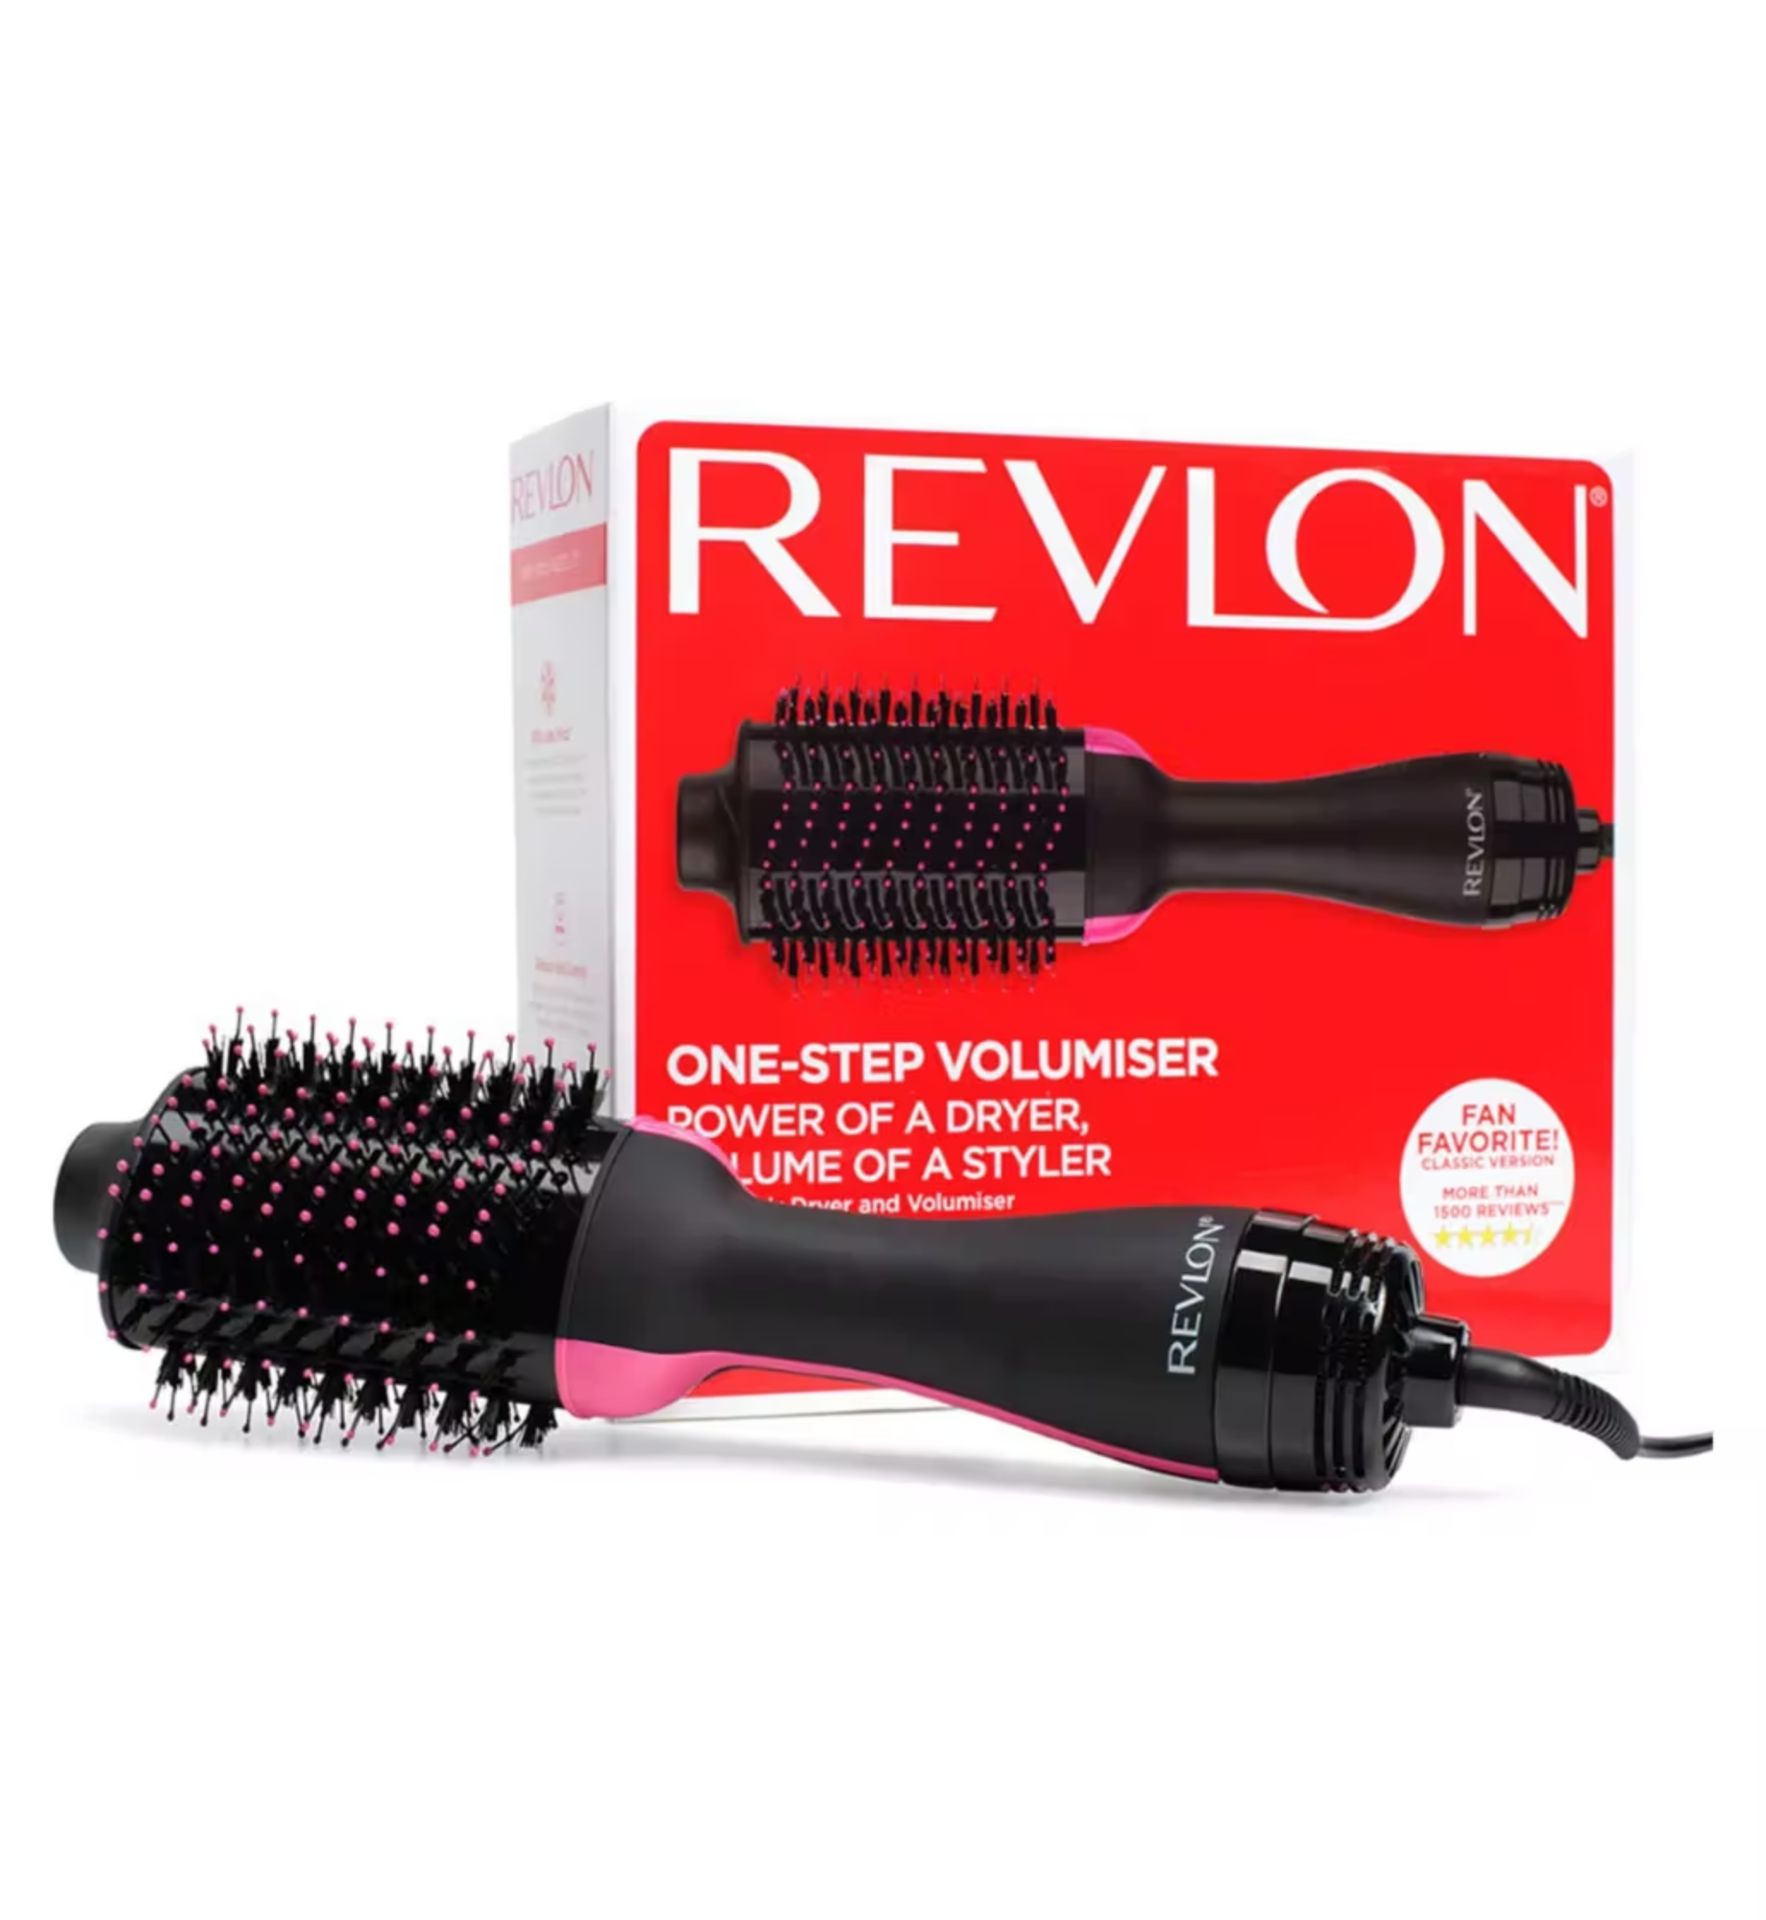 Trade Lot 10 x Revlon Hot Air Styler & 2x Revlon One Step Hair Dryer - Image 2 of 2